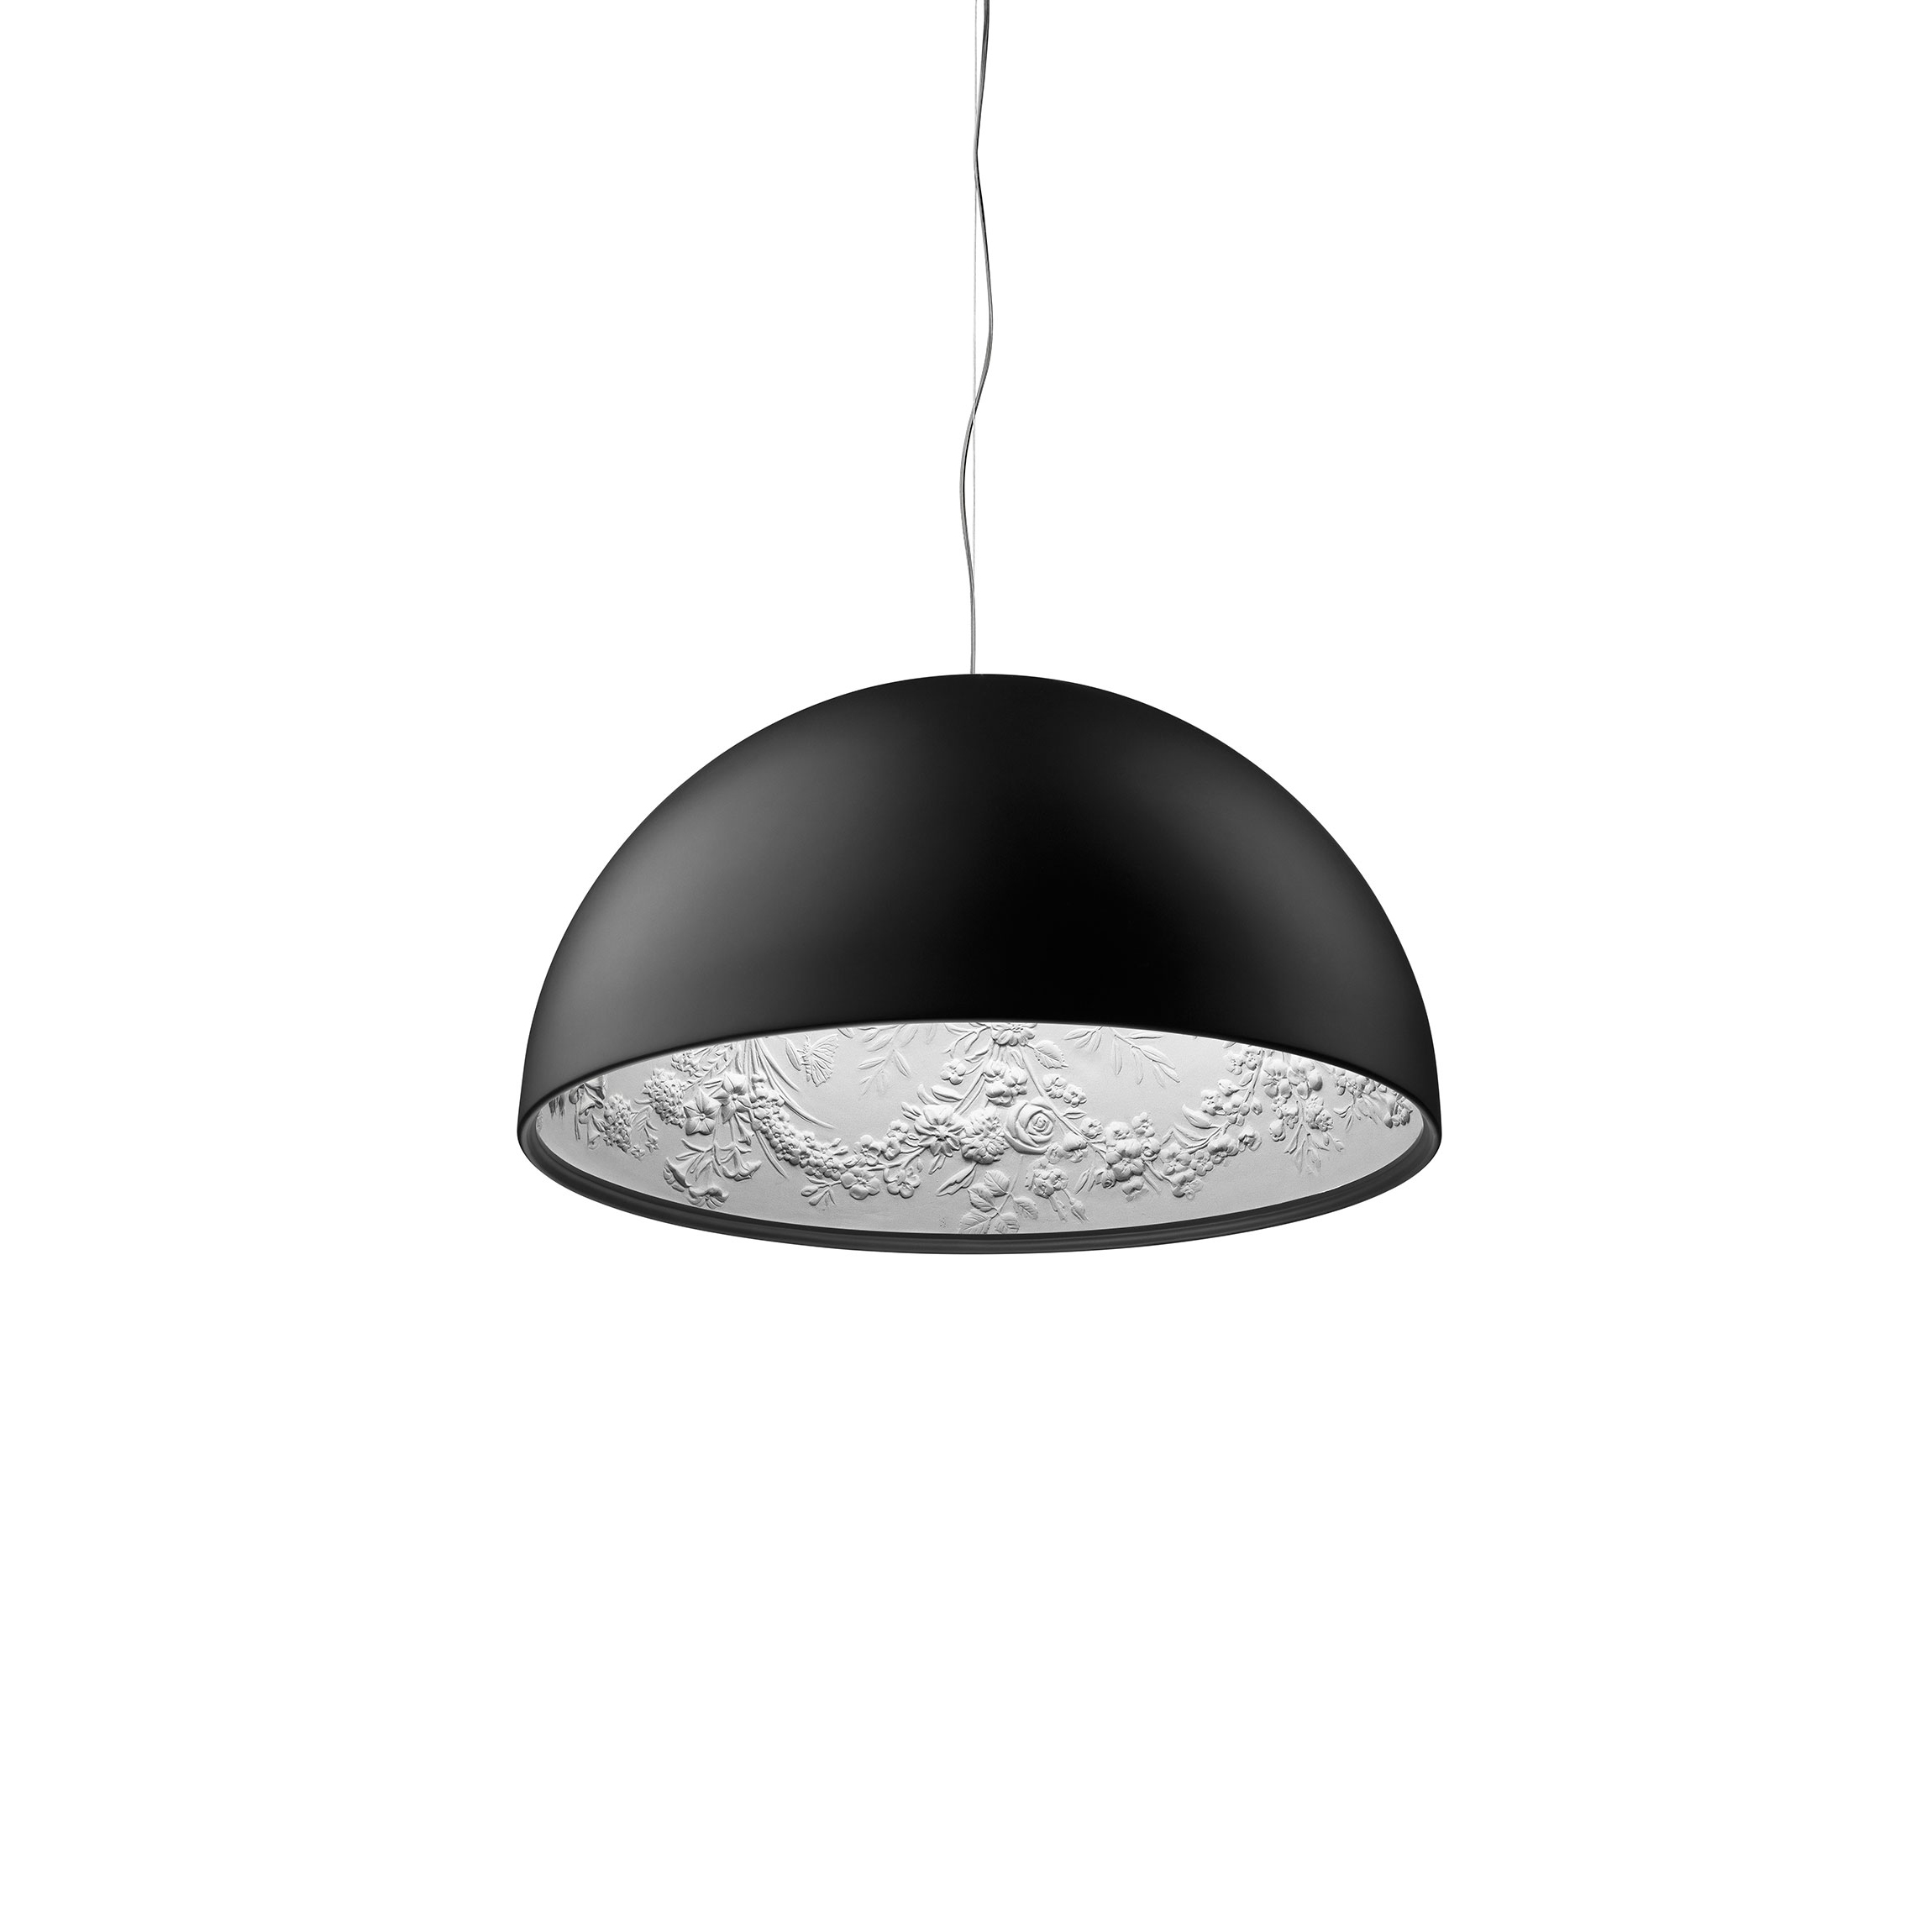 Flos - Skygarden Small LED Lampe suspendue